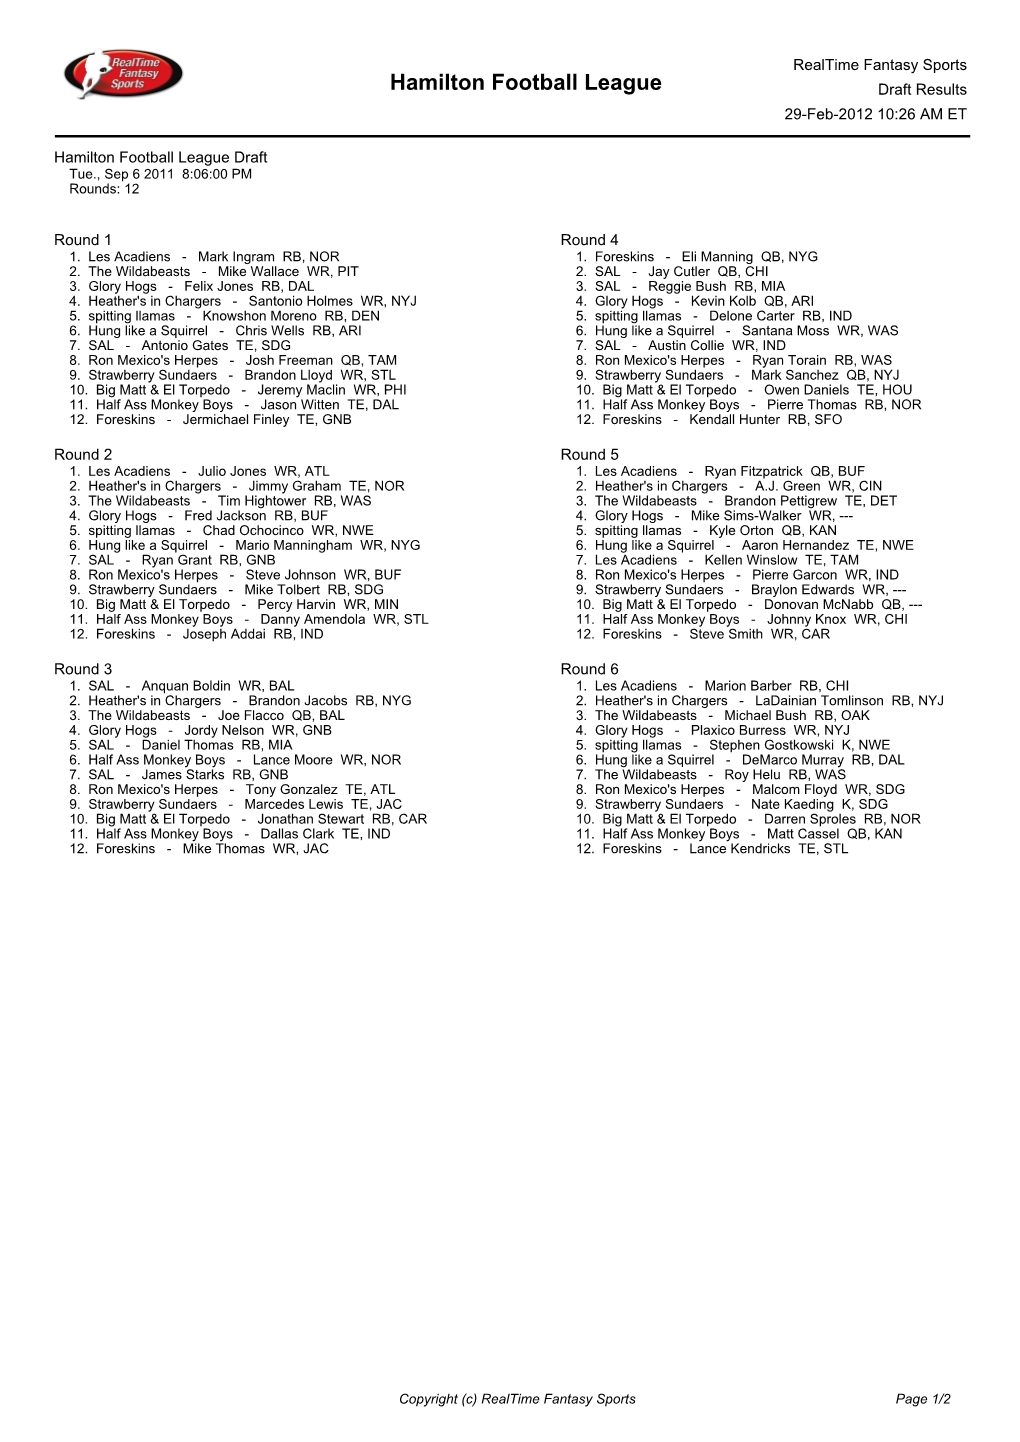 Hamilton Football League Draft Results 29-Feb-2012 10:26 AM ET